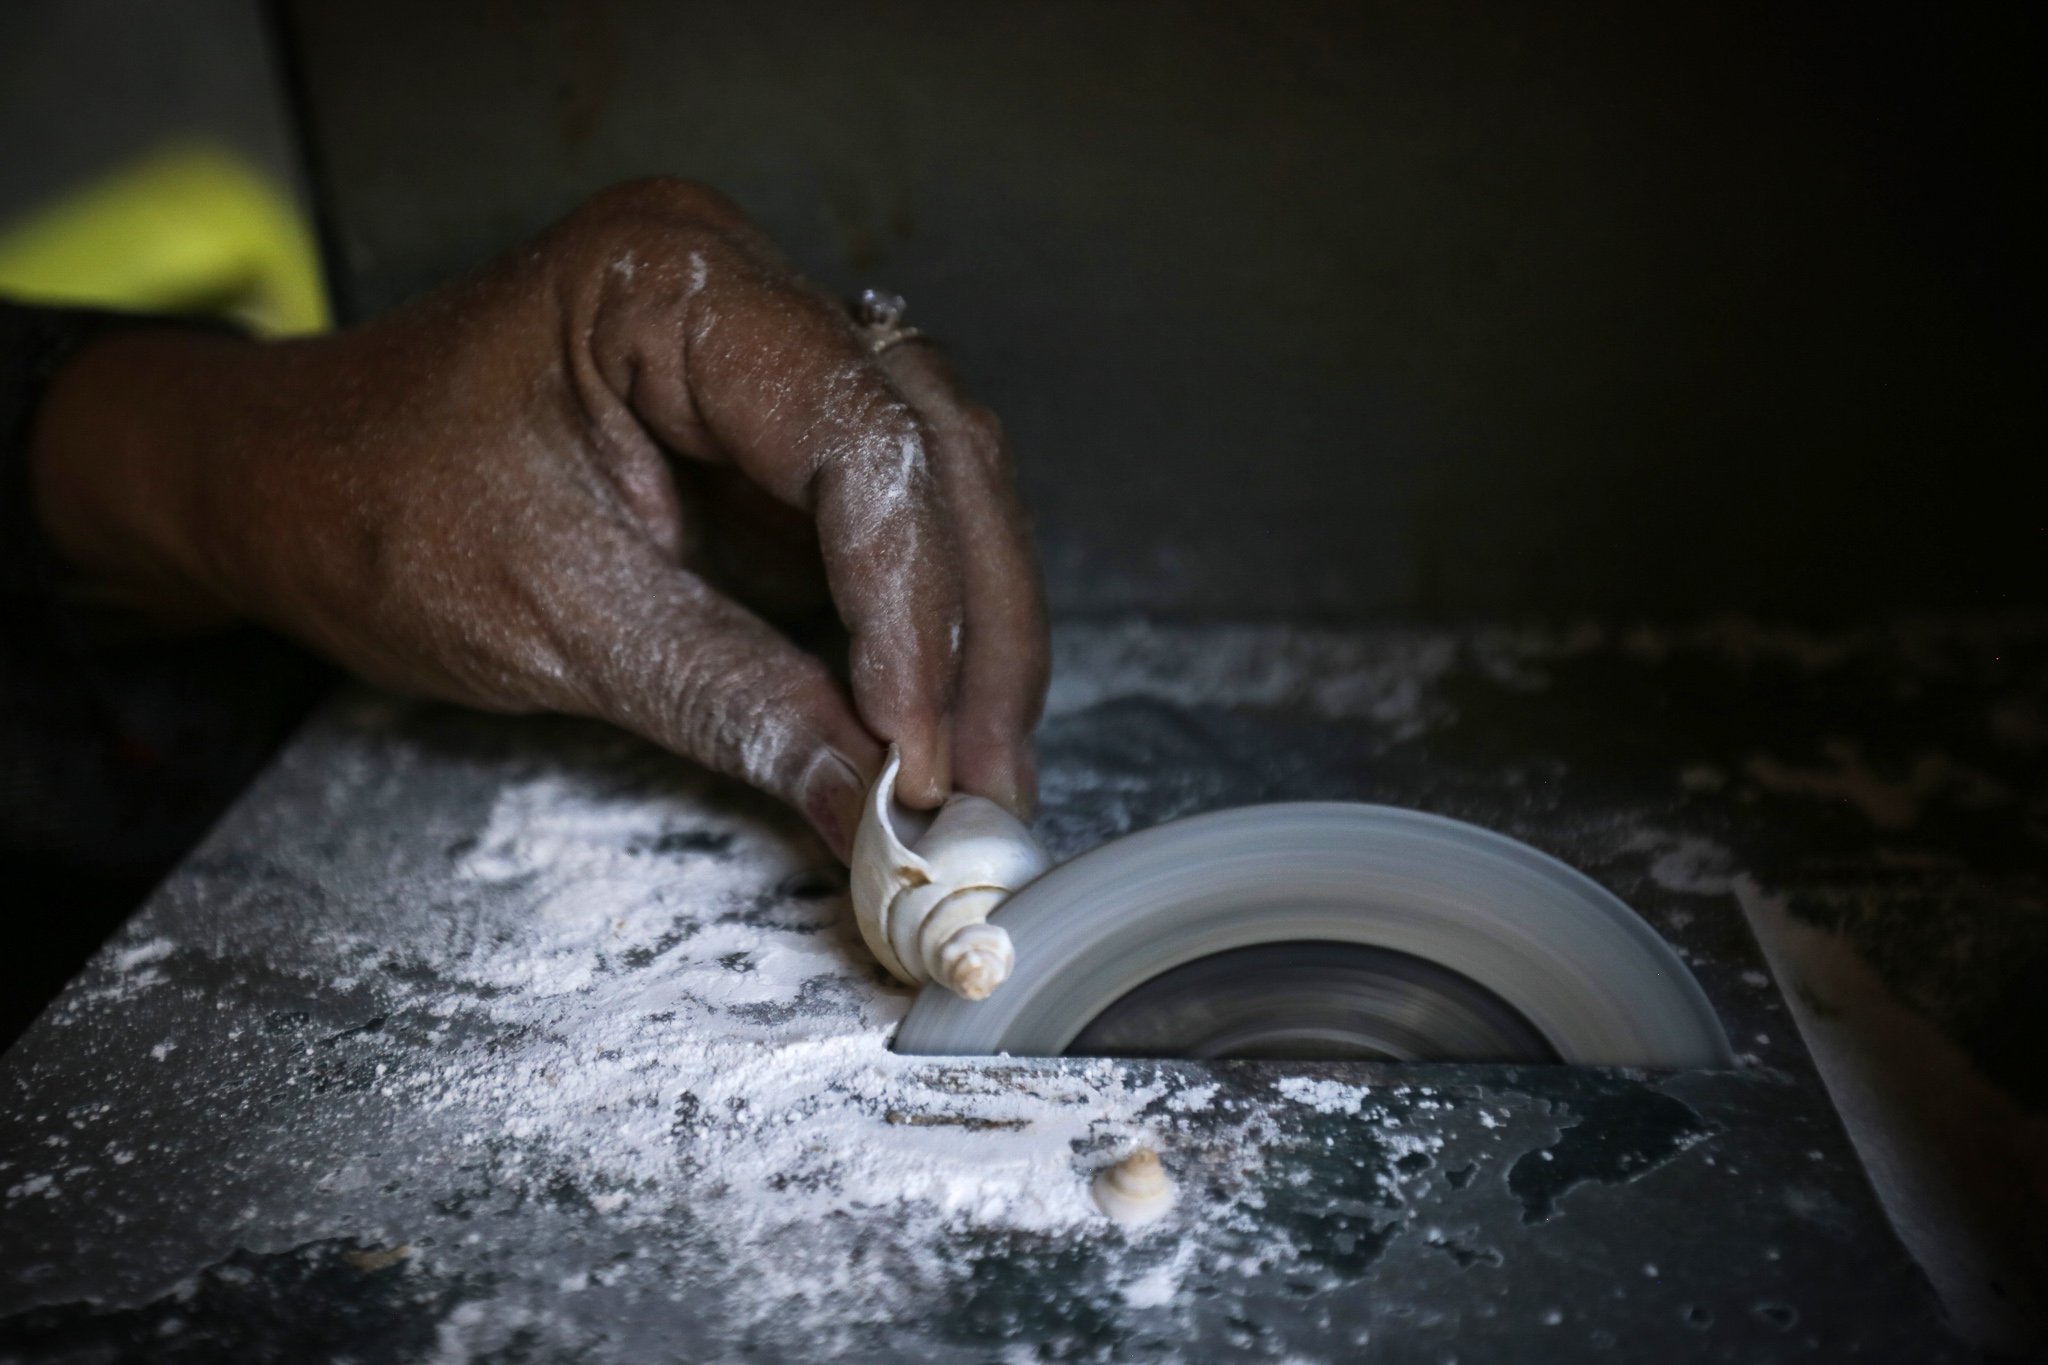 Perajin memotong cangkang gonggong dan mebetuknya sesuai pola yang diinginkan di UMKM Rumah Keong, Batam, Kepulauan Riau.